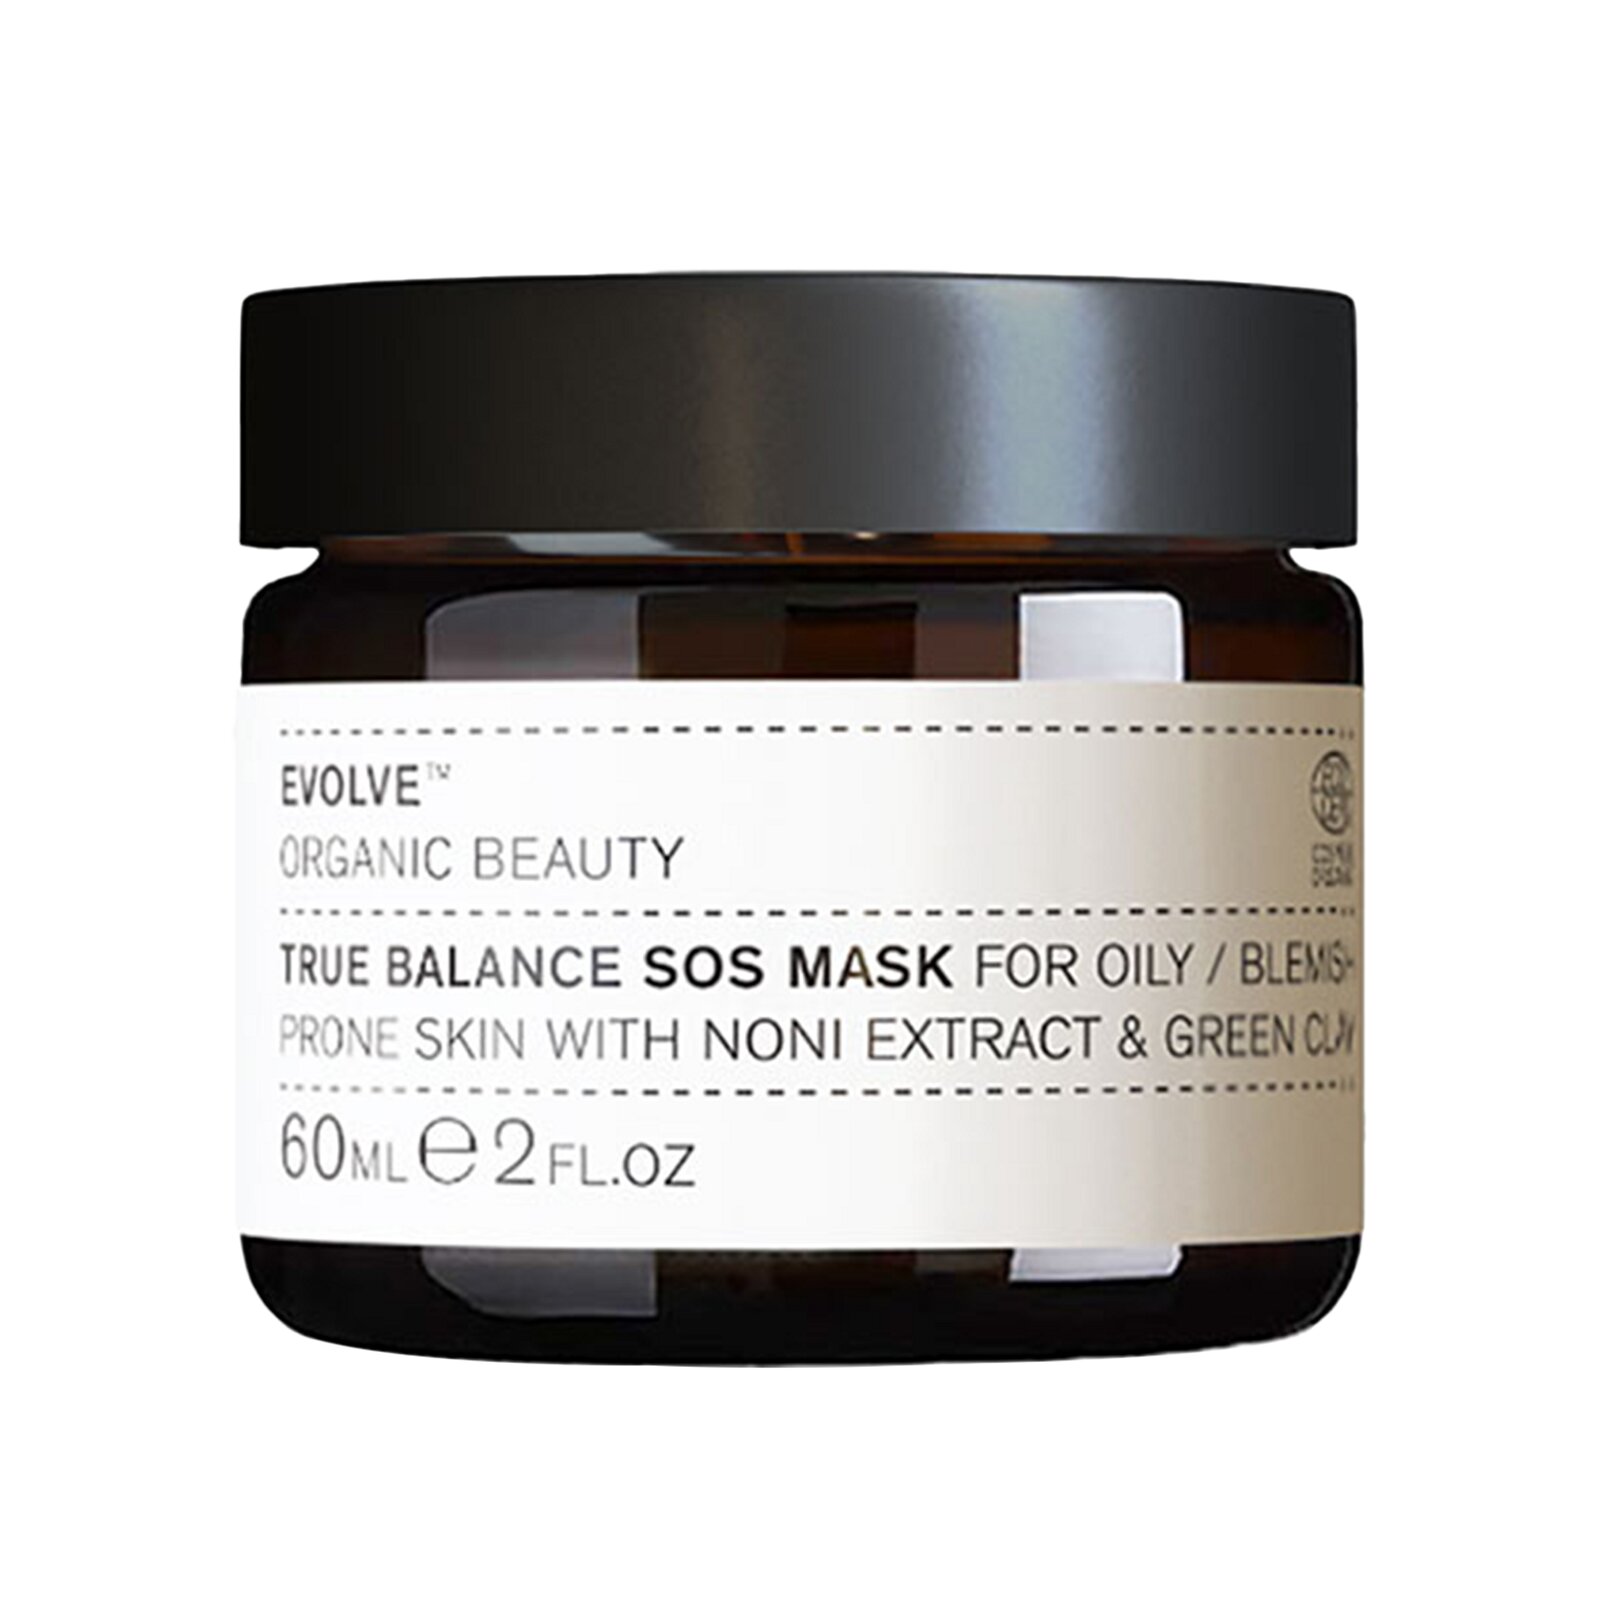 Evolve True Balance SOS Mask 60 ml